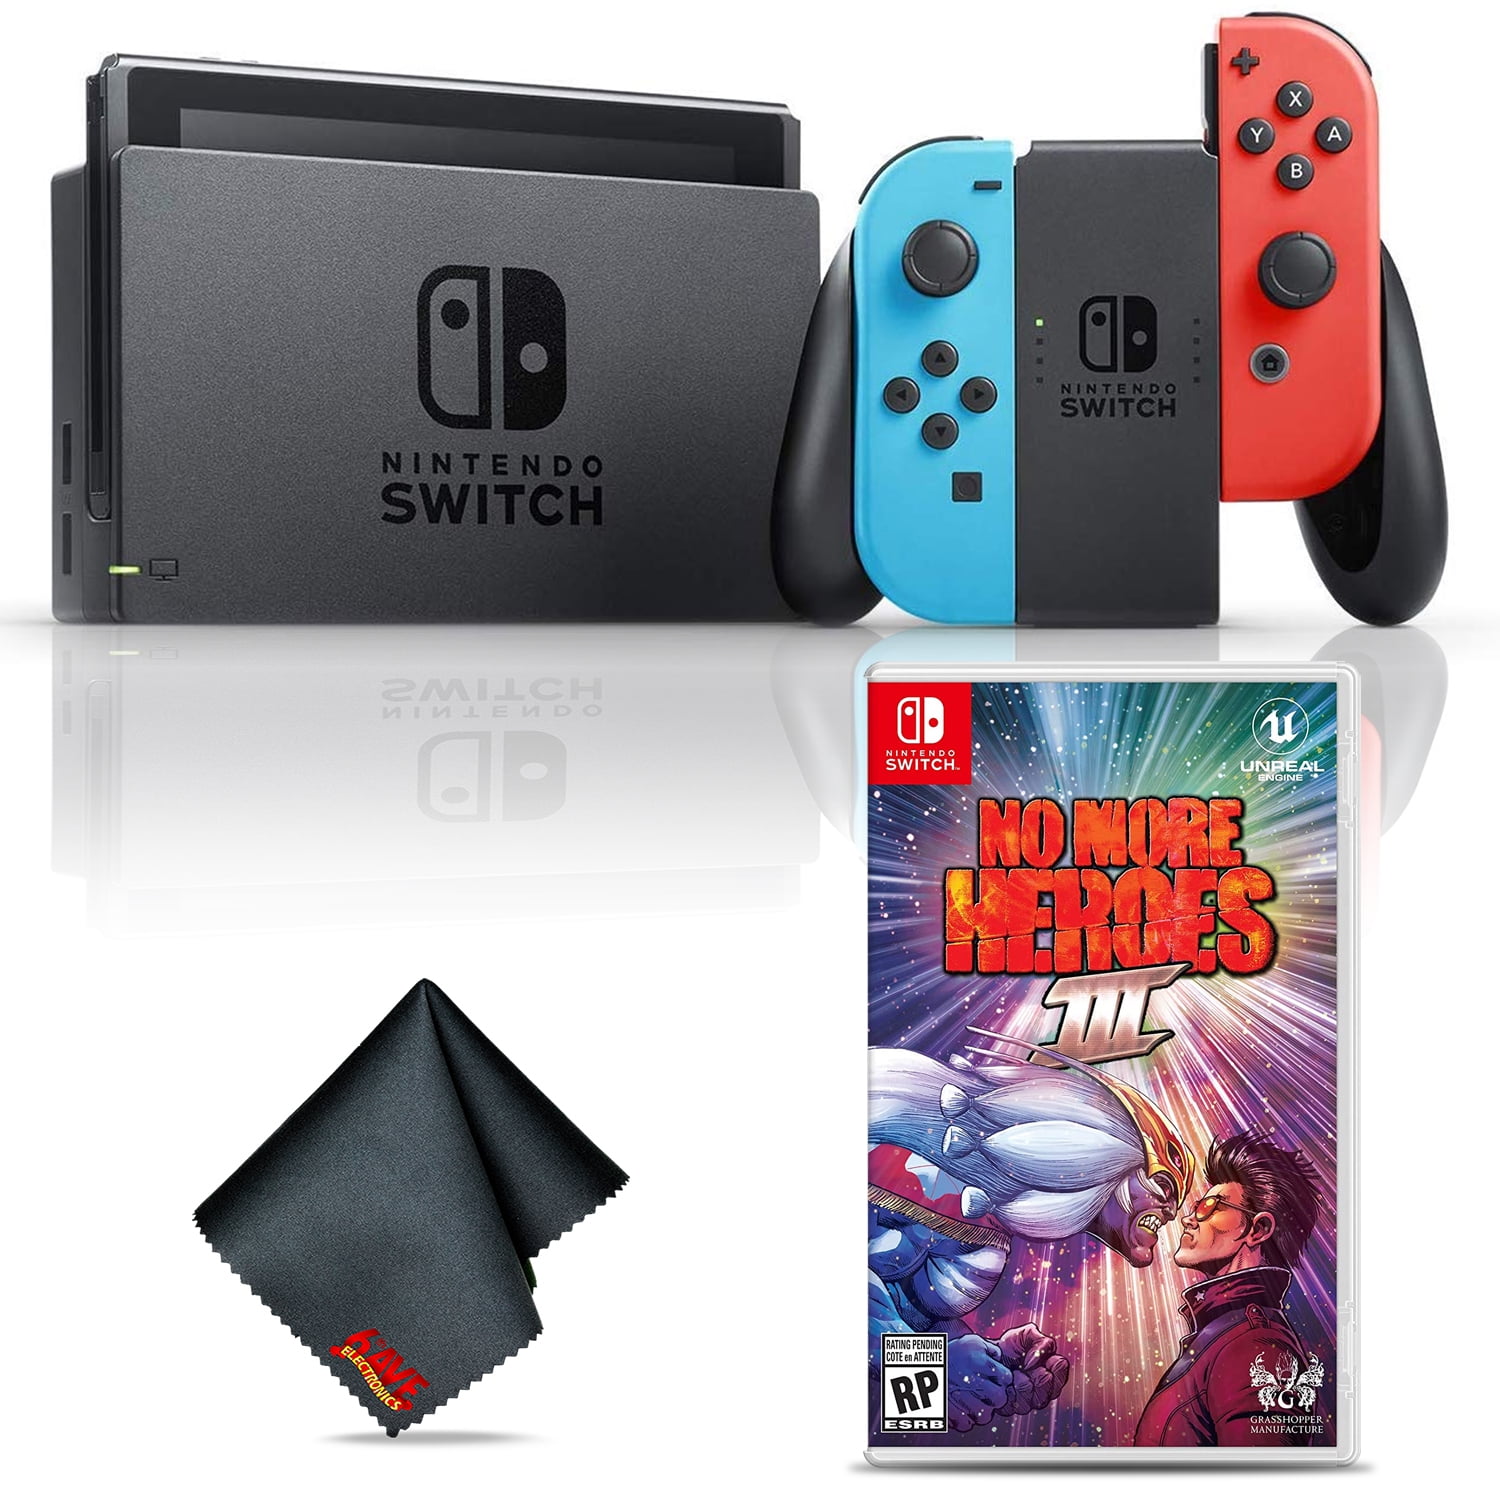 Nintendo switch neon. Nintendo Switch квадратный монолитный геймпад. Nintendo Switch Neon Blue Red купить 24 апреля. Установка чипа Нинтендо свитч rp2040zero.